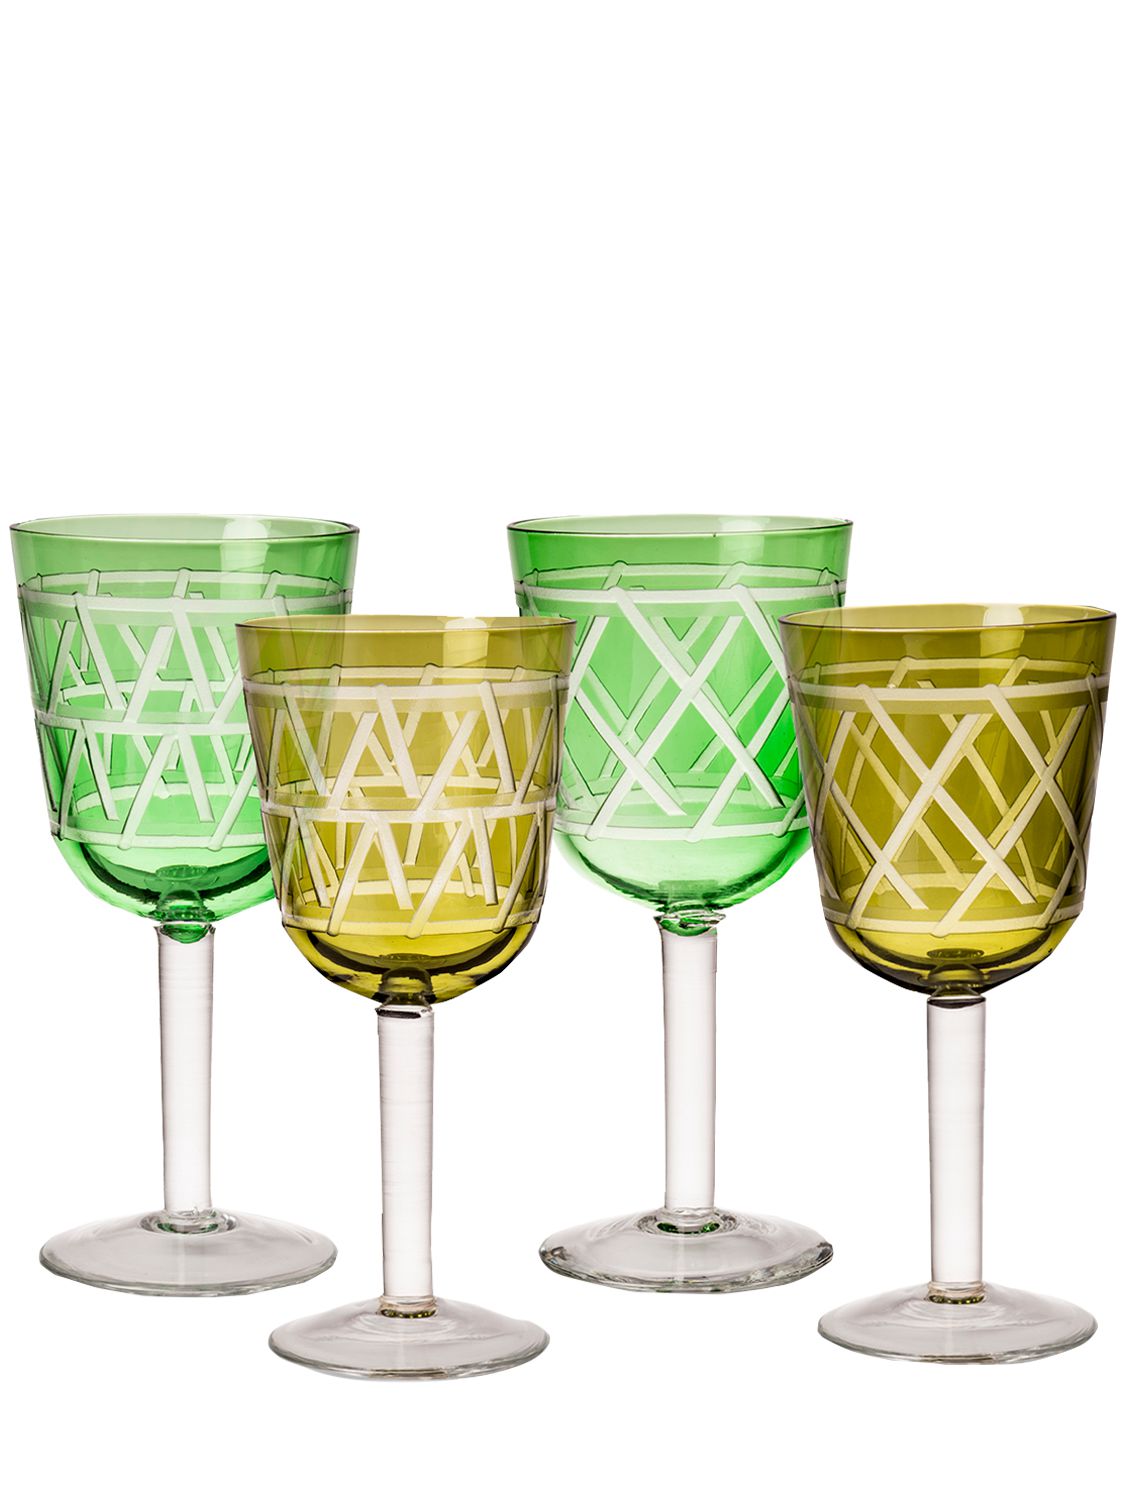 Polspotten Tie Up Set Of 4 Wine Glasses In Multi-colour